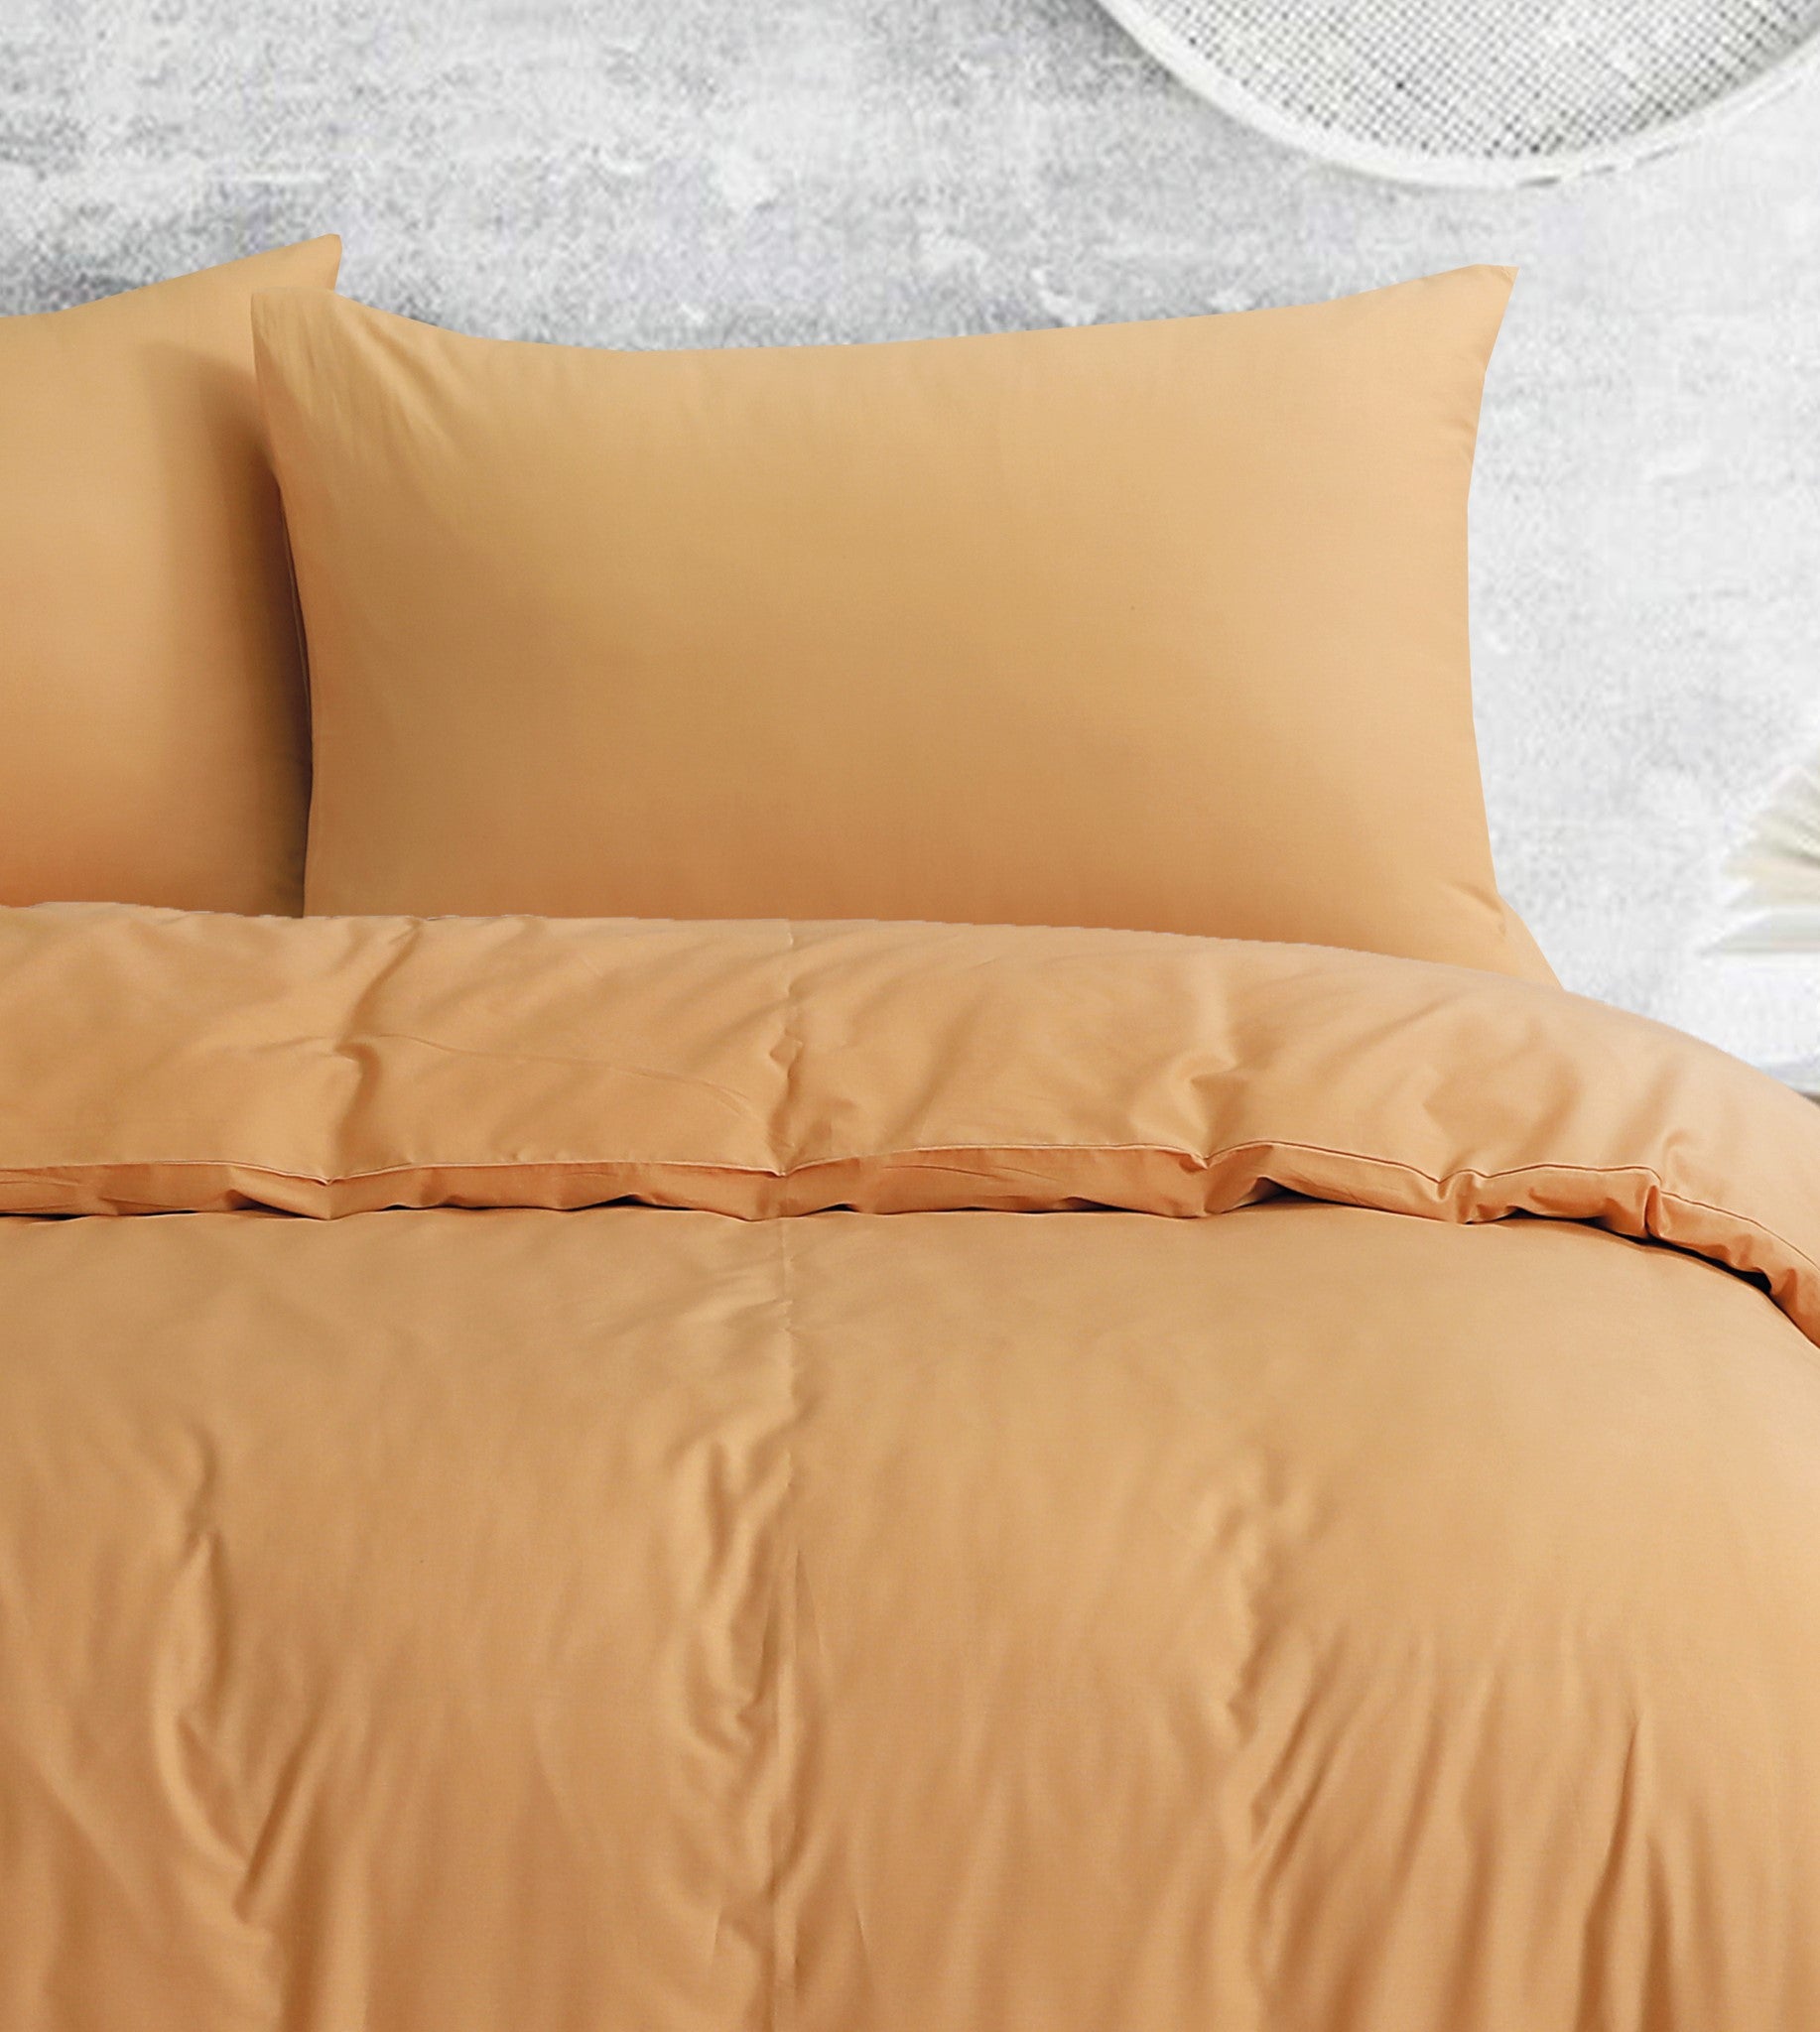 Duvet Cover with European Pillow Covers | Royale Cotton Latte